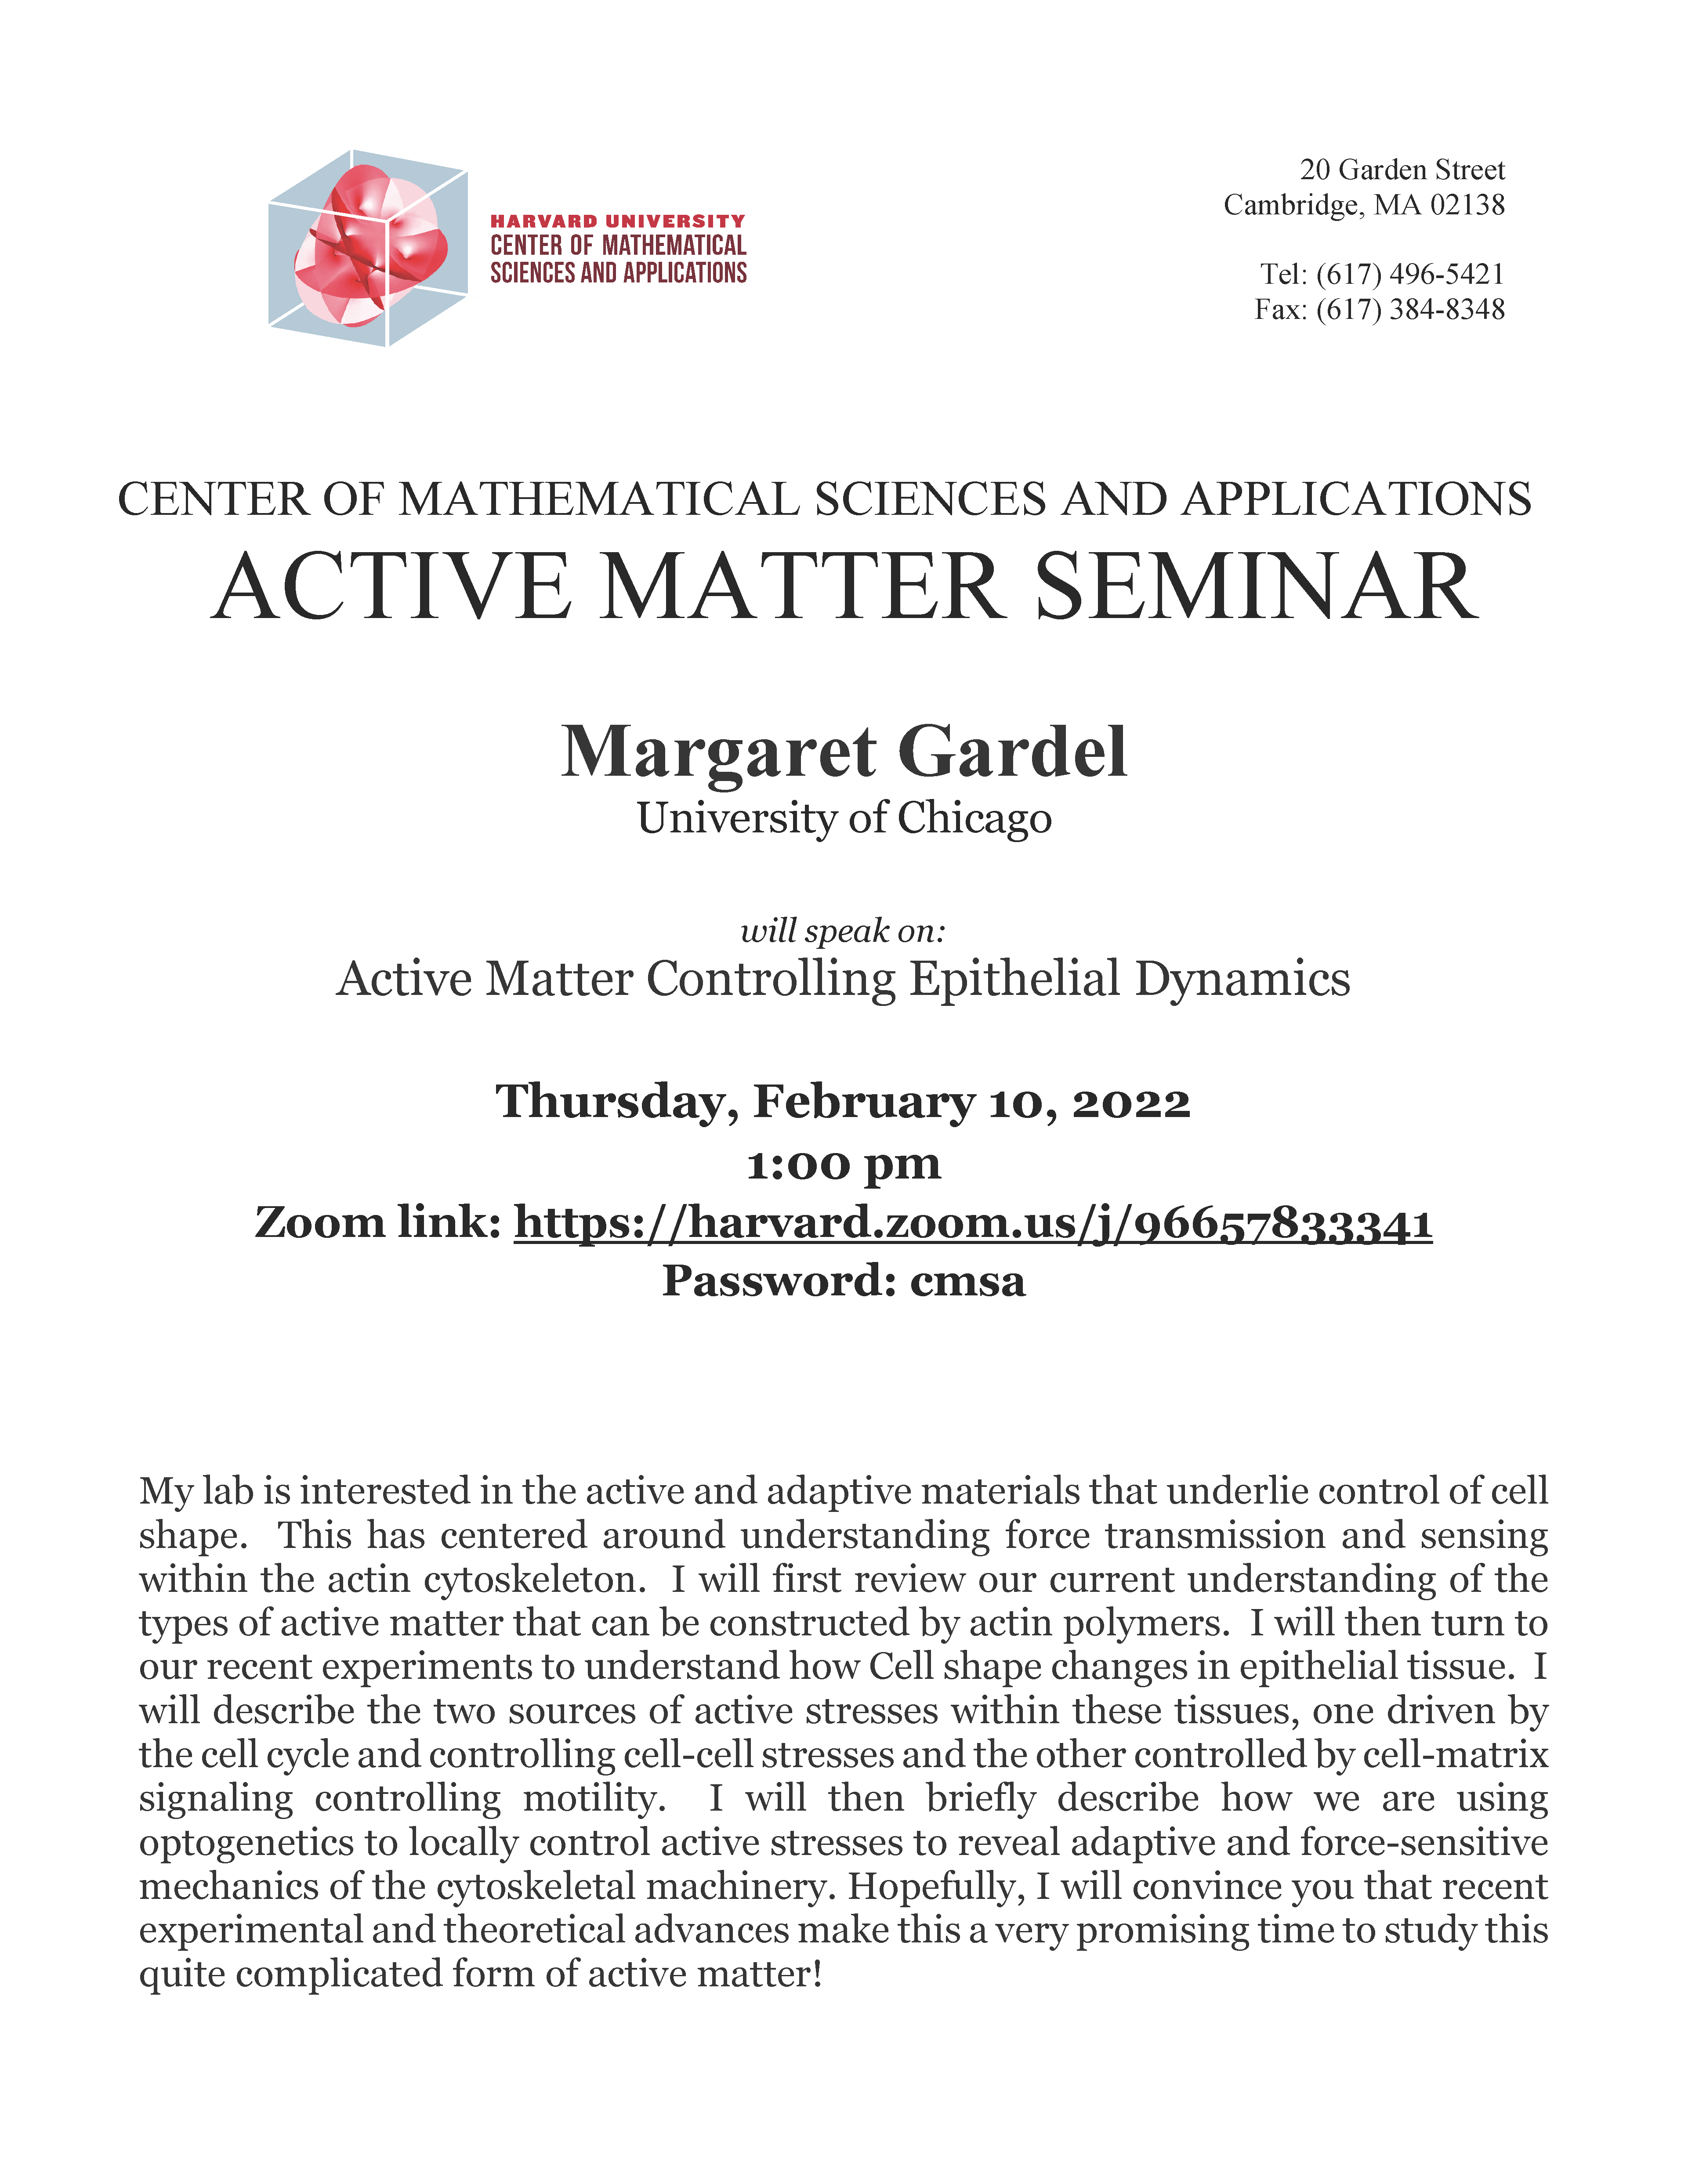 CMSA-Active-Matter-Seminar-02.10.22